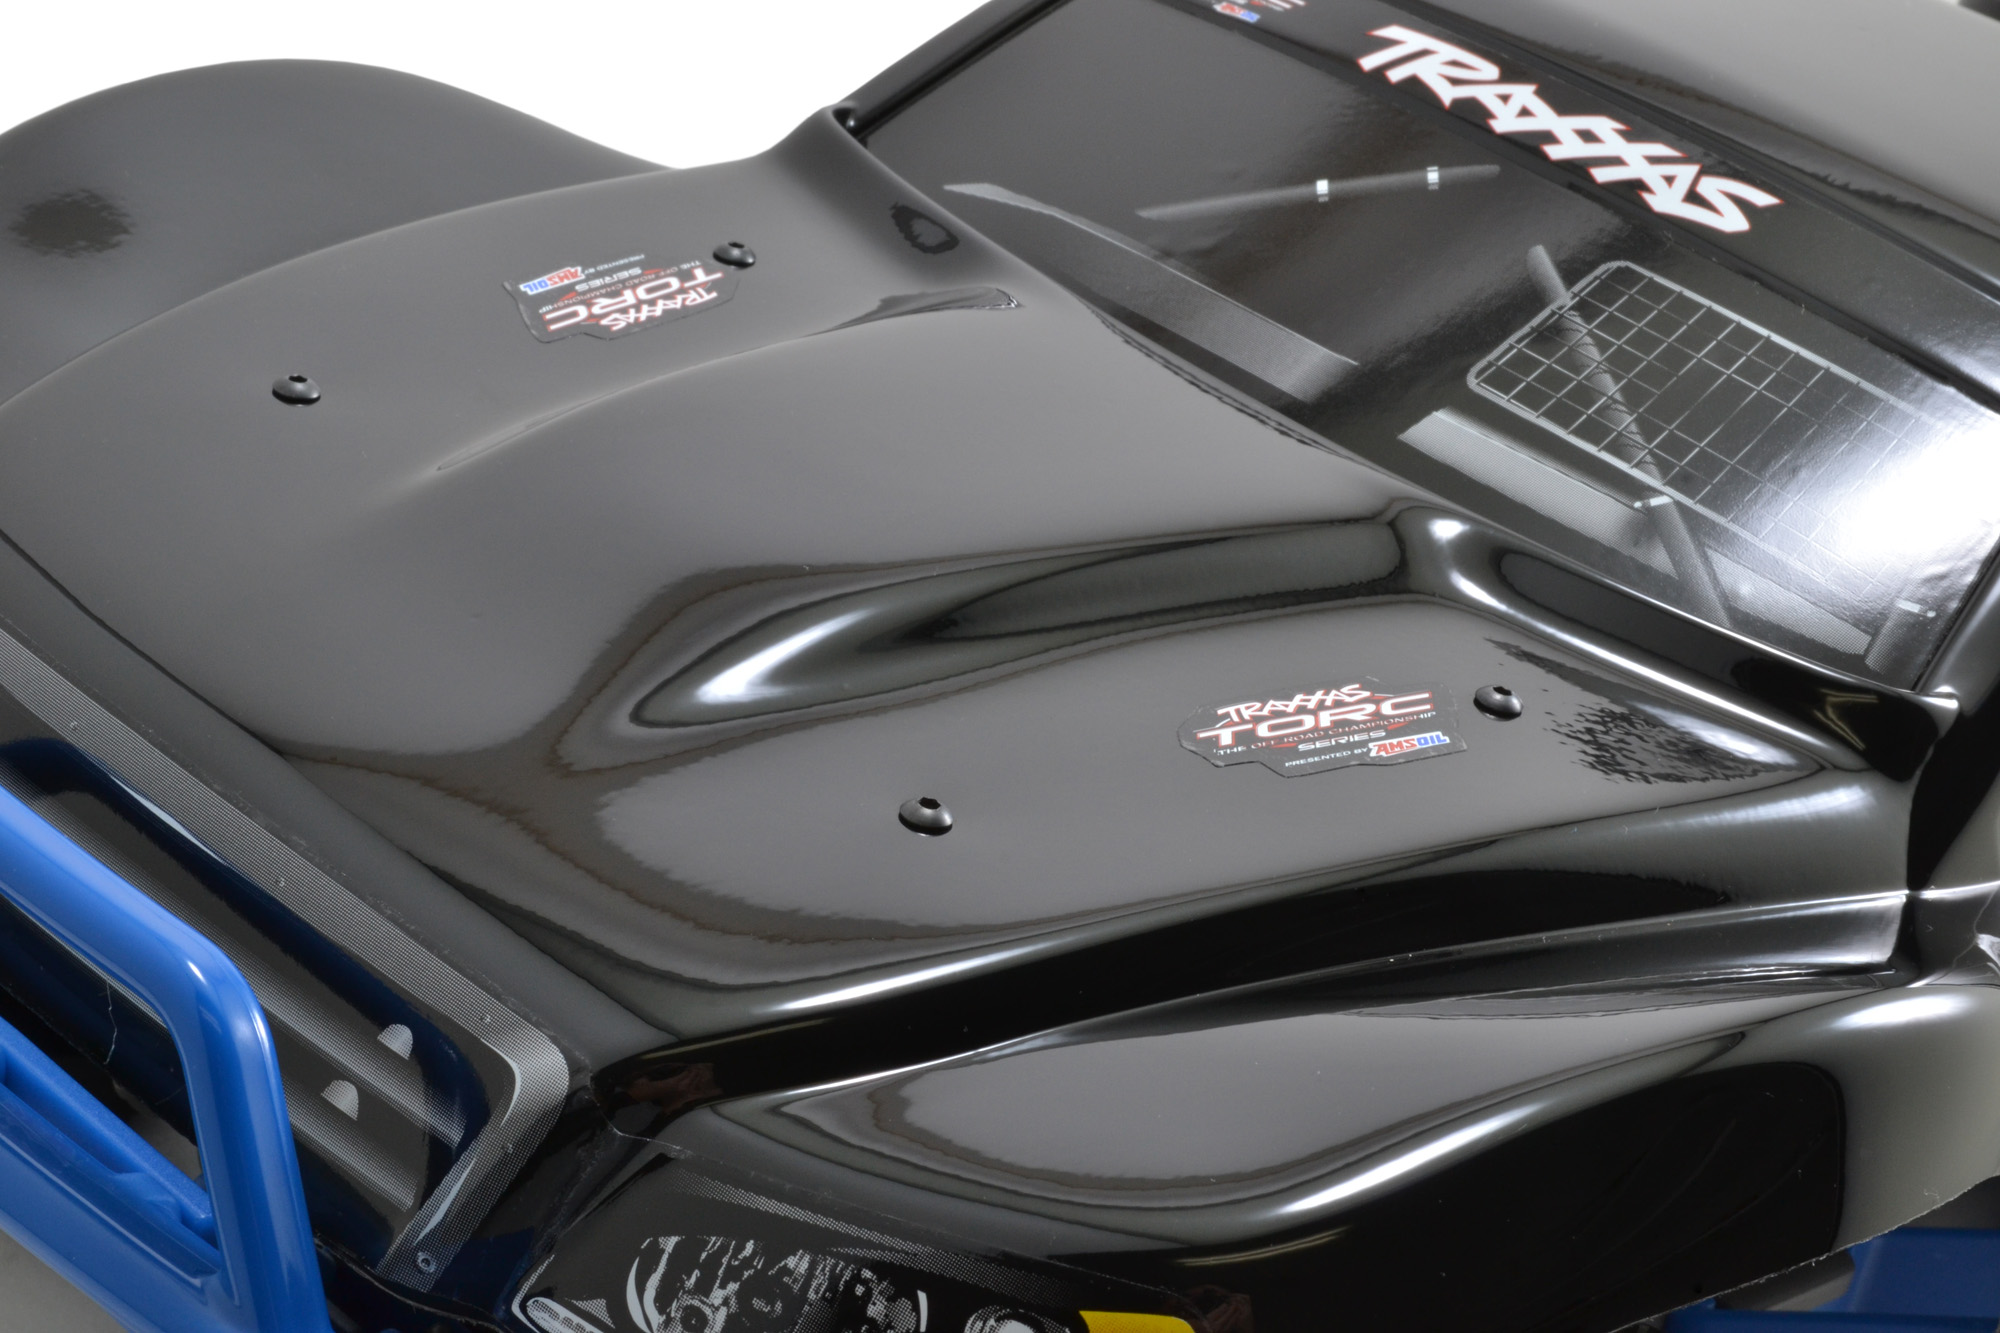 Dark Blue Details about   Aluminium Rear Shell Body Bracket Holder For TRXXAS SLASH 2WD RC Car